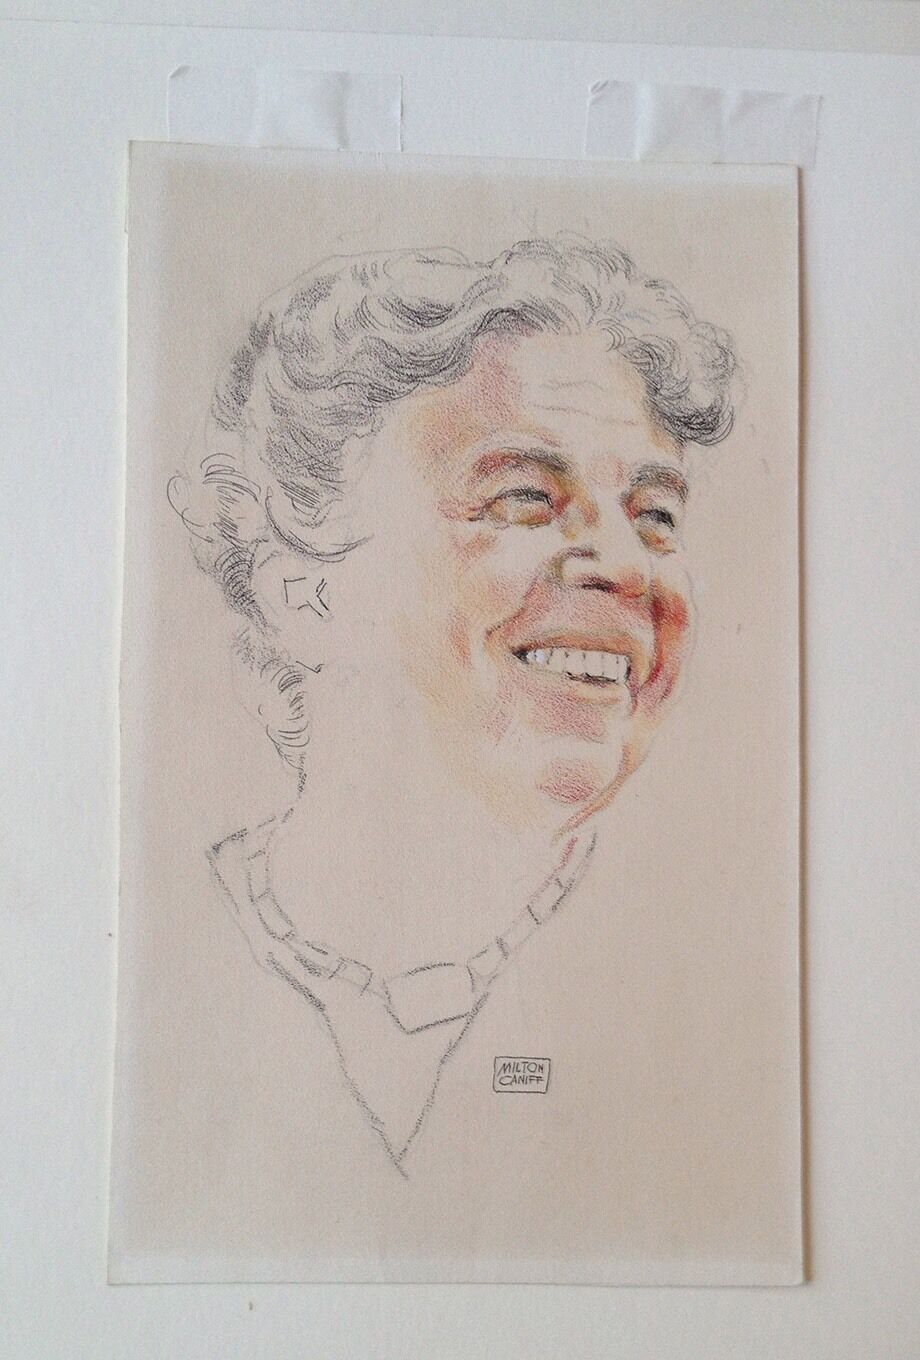 RARE Original Eleanor Roosevelt Portrait By Milton Caniff. Signed. Pencil & Ink